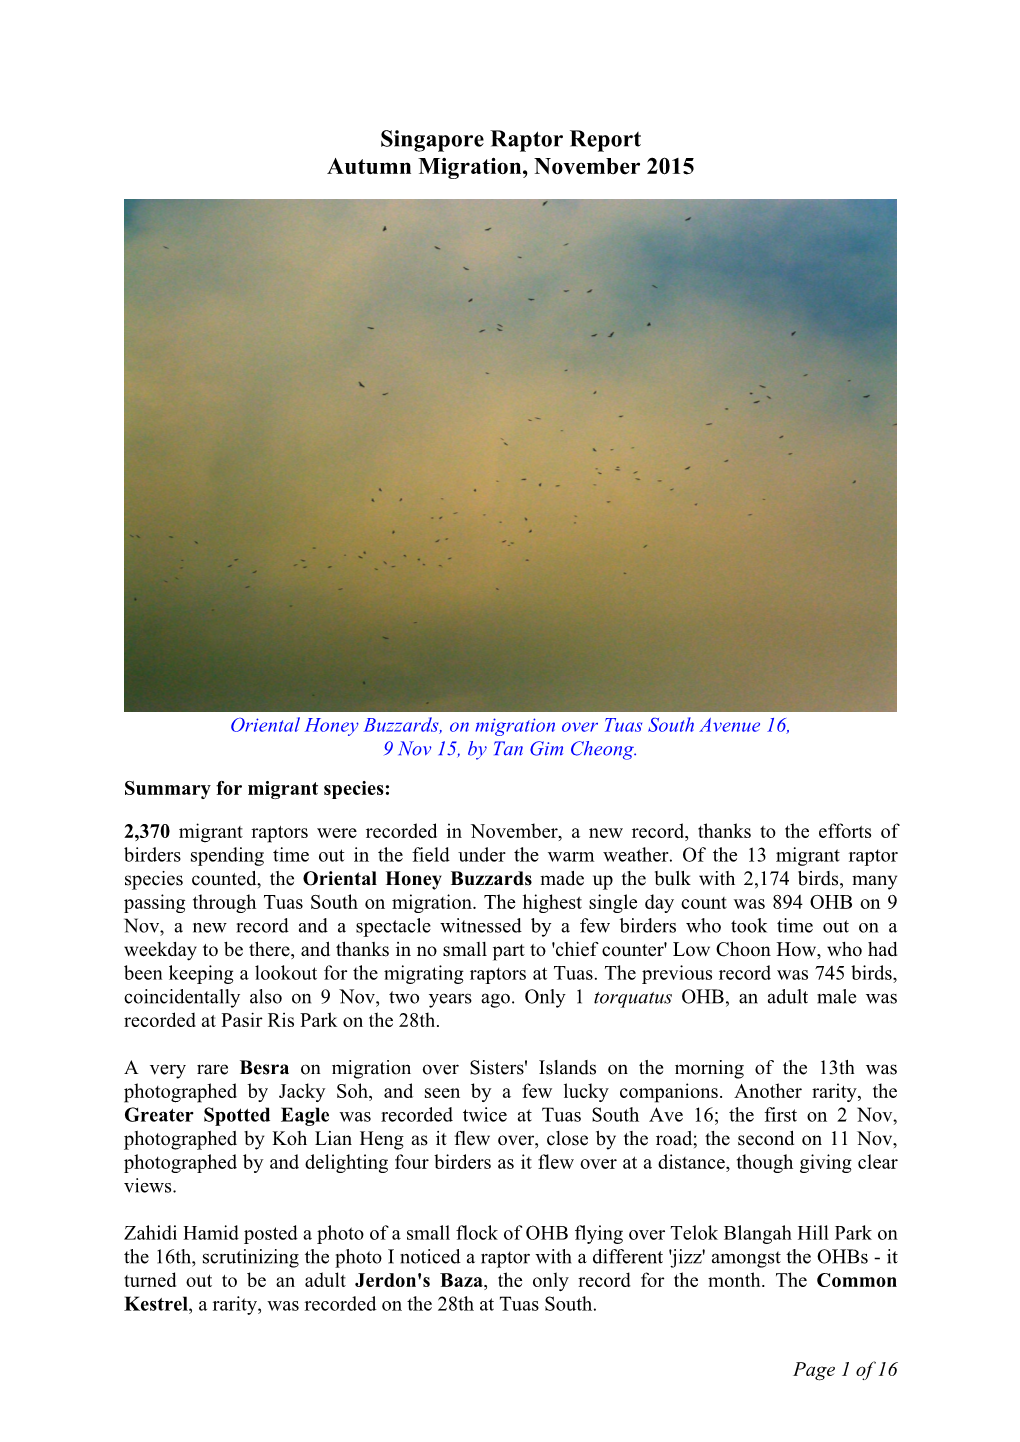 Singapore Raptor Report Autumn Migration, November 2015